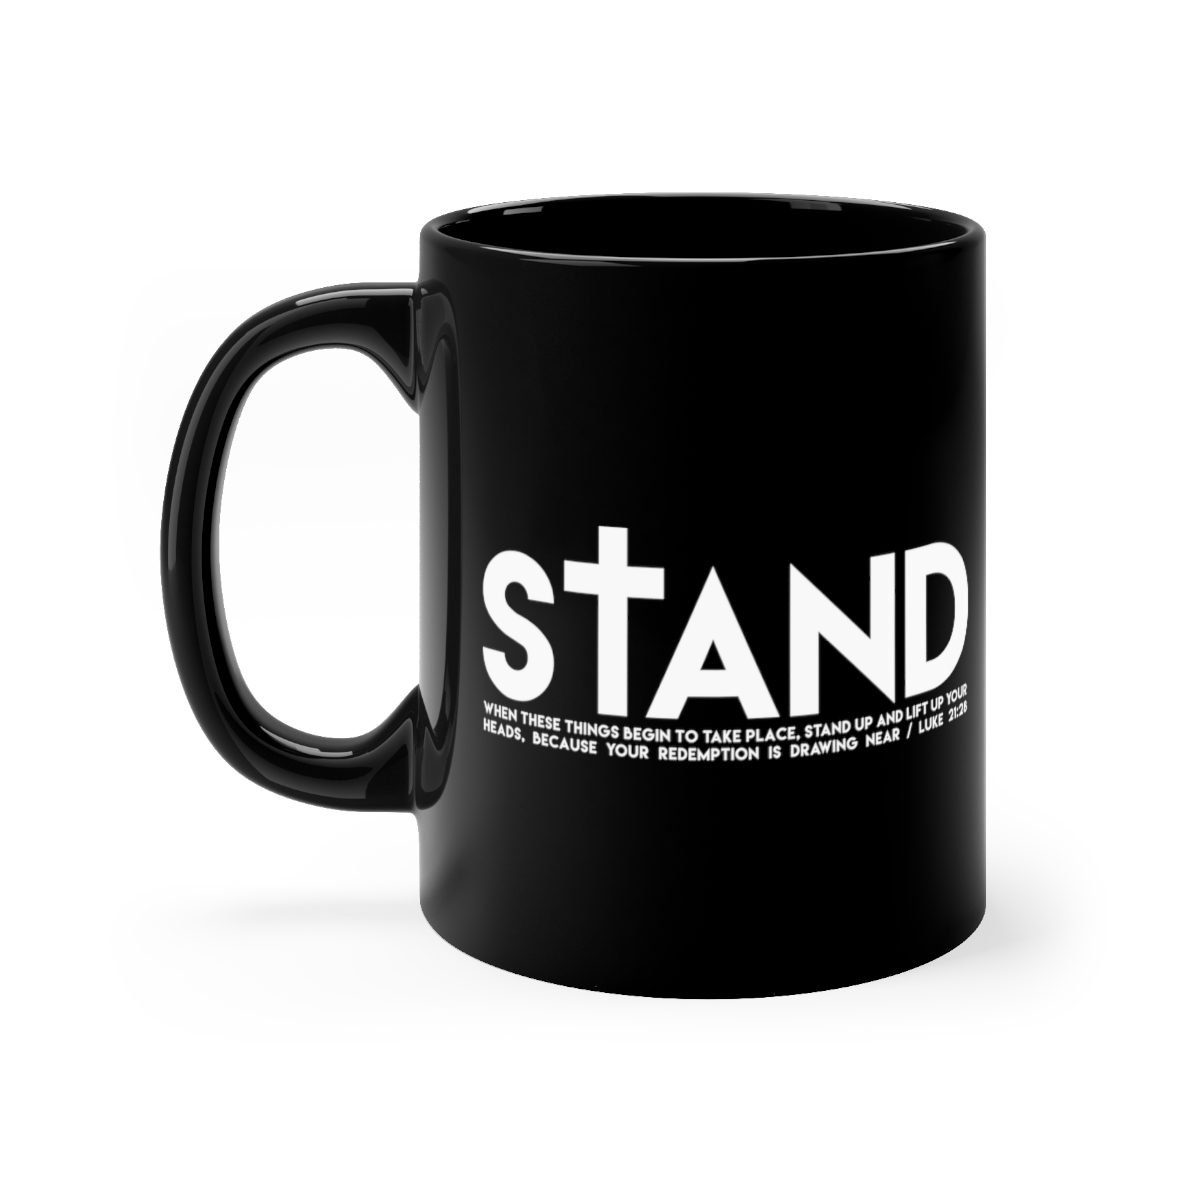 STAND by Designs of Defiance Black mug 11oz